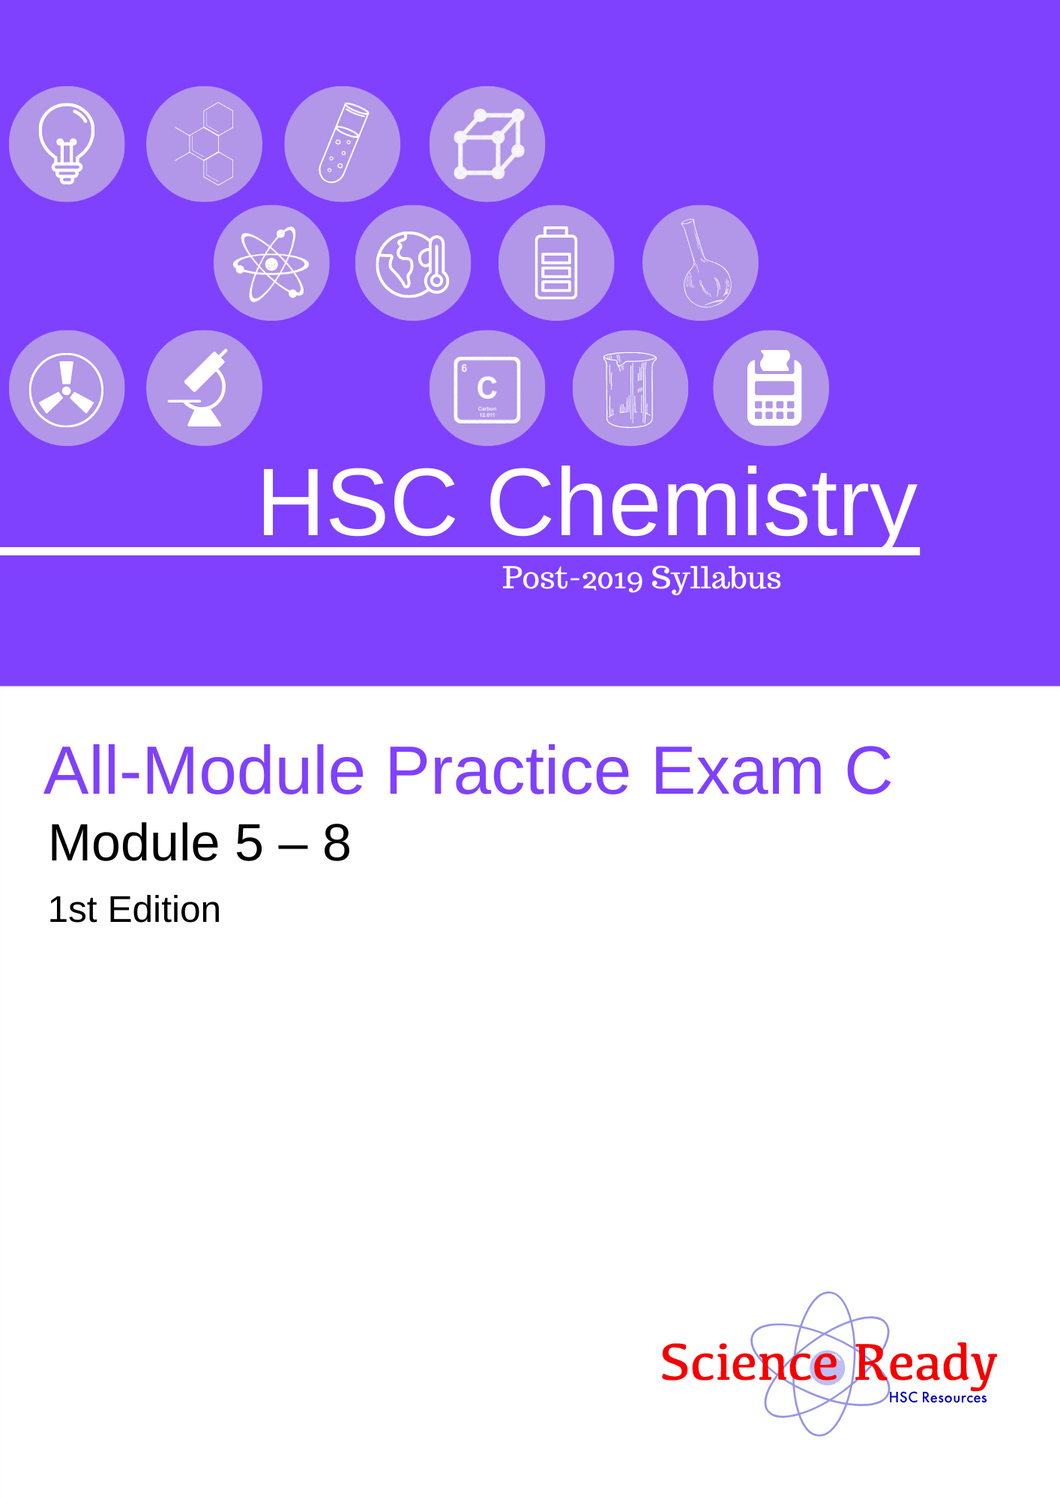 HSC Chemistry All-Module Practice Exam C (2021)